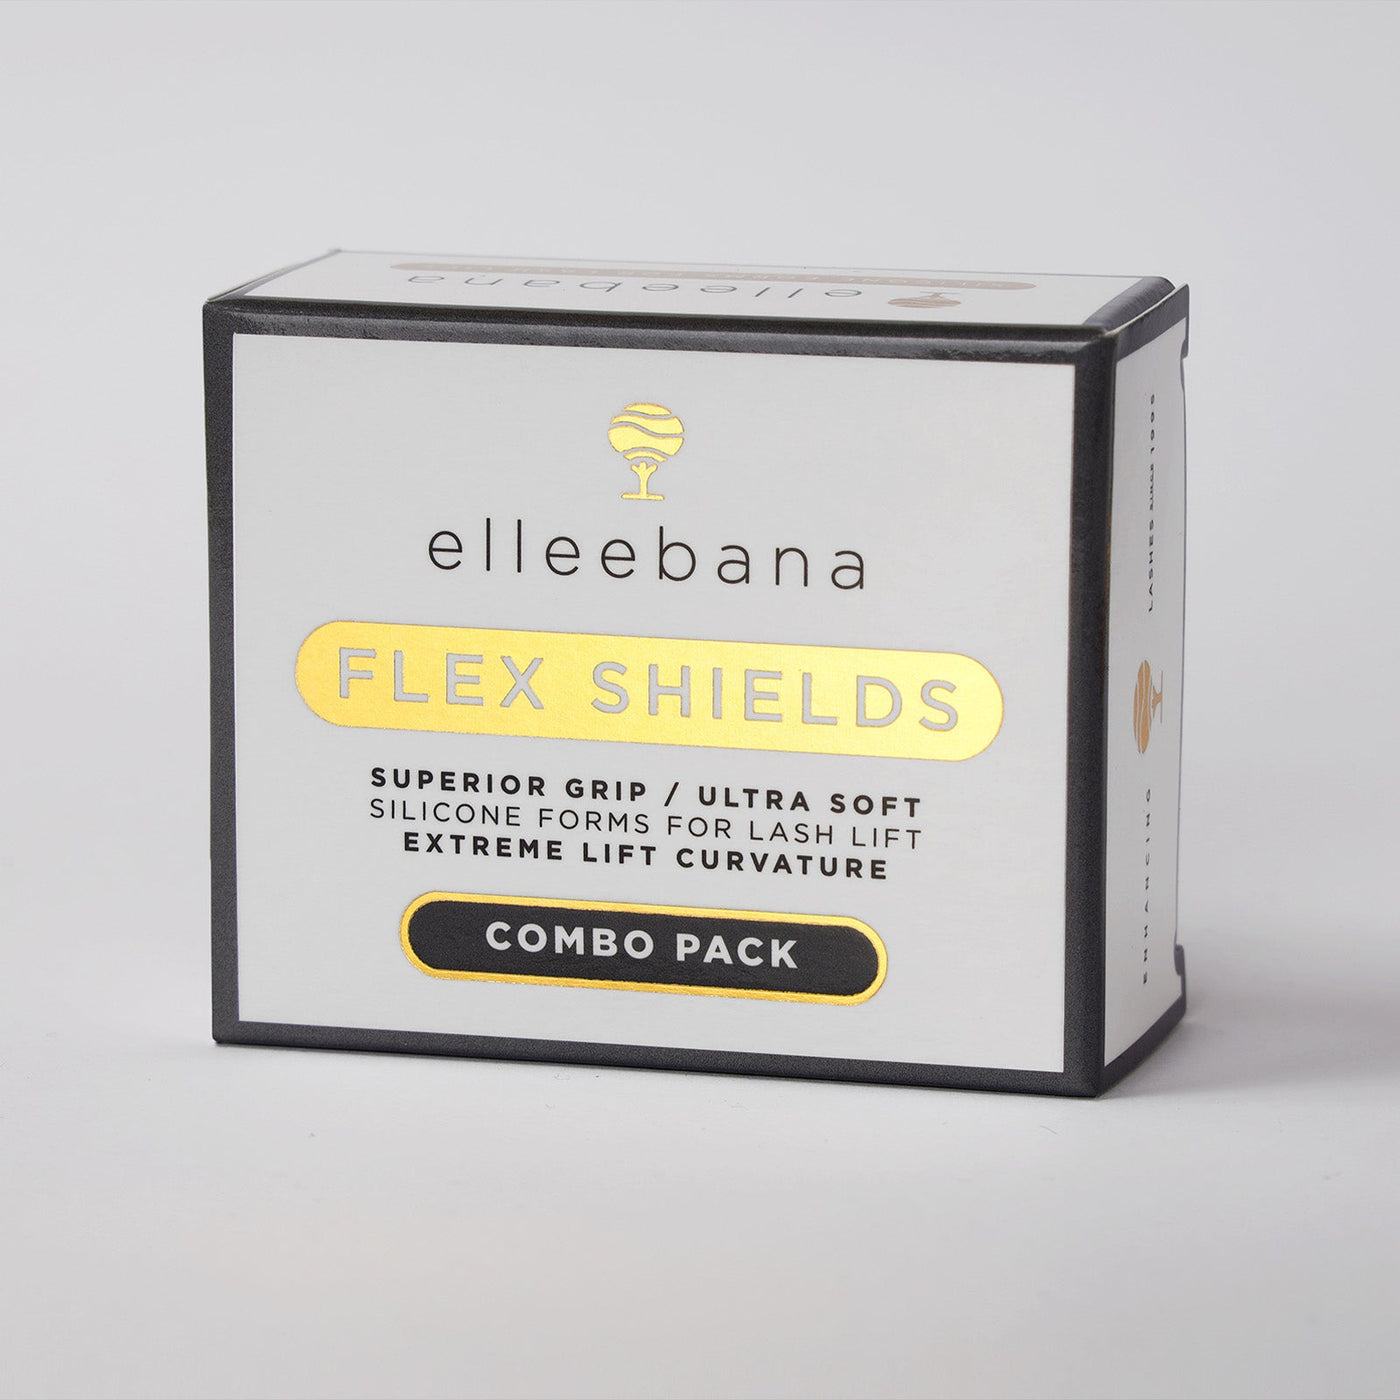 Elleebana Flex Shields Combo Pack